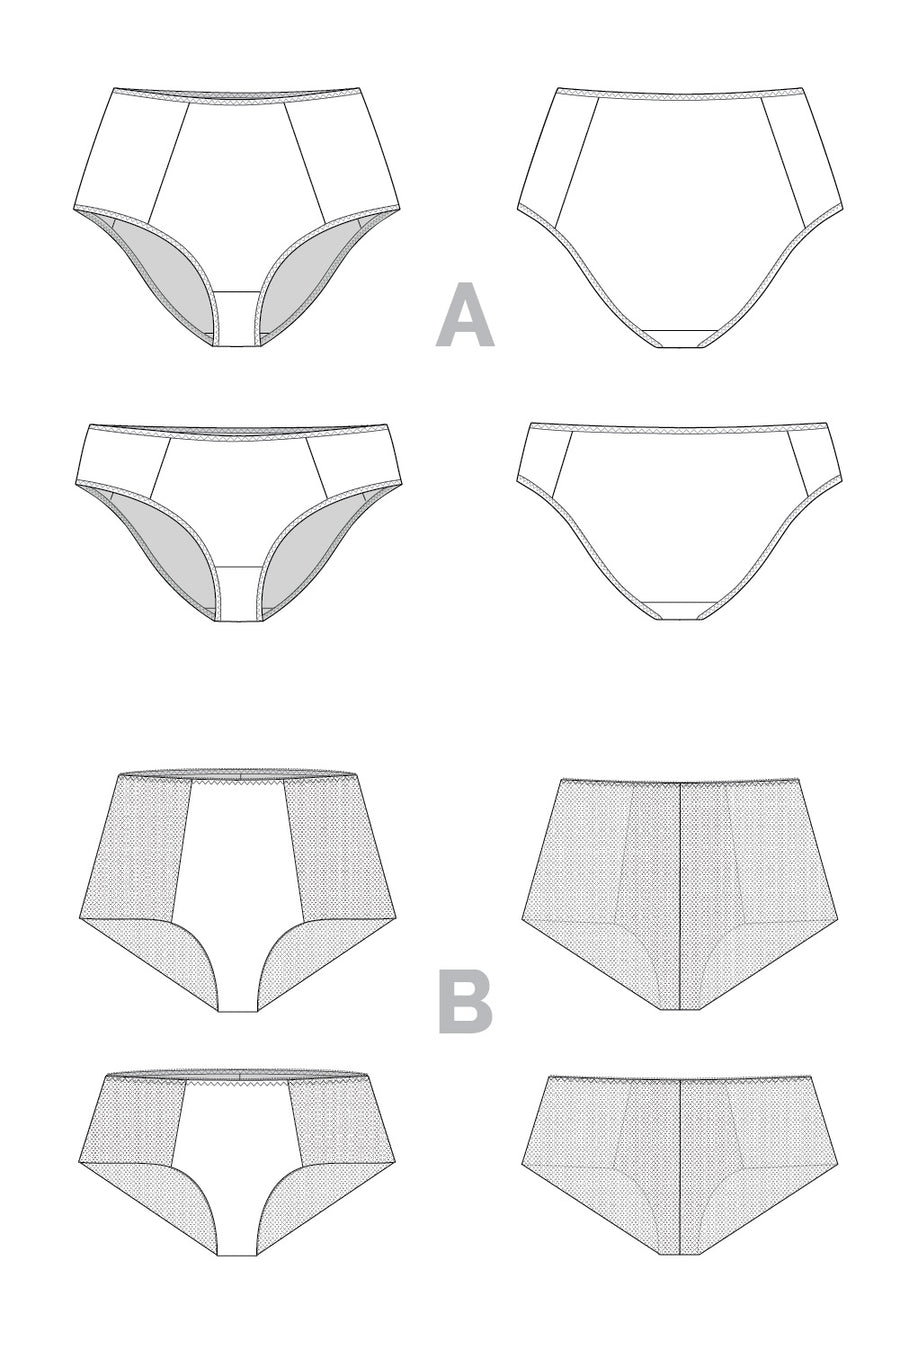 Linen panties pattern plus size, No elastic underwear patter - Inspire  Uplift